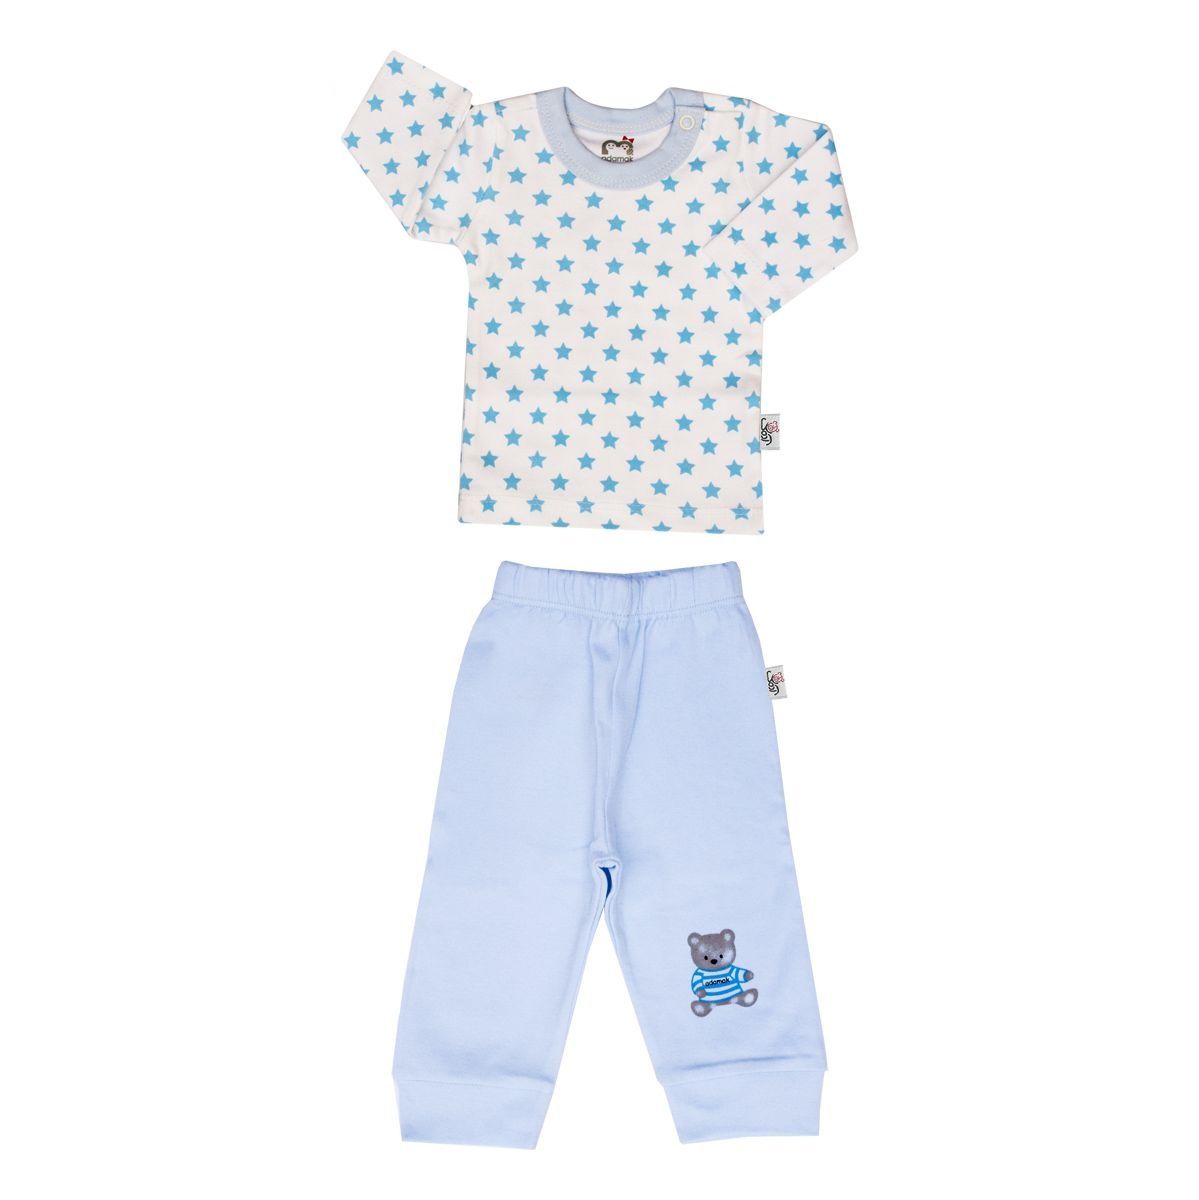 ست تی شرت و شلوار نوزادی پسرانه آدمک طرح ستاره آبی کد 04  -  - 2